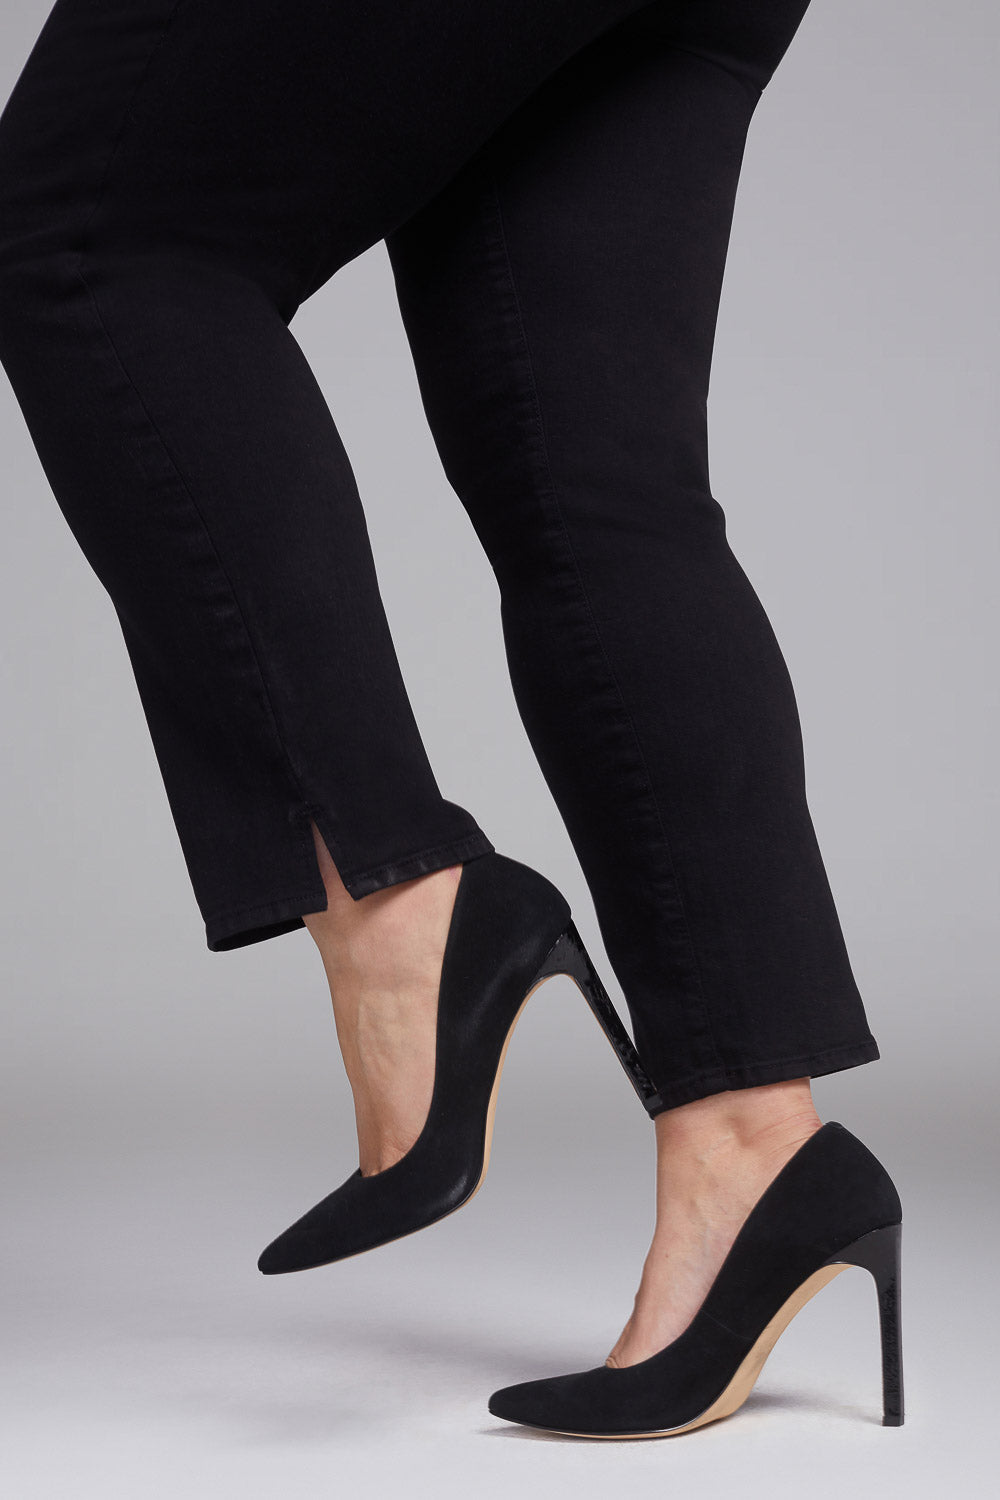 NYDJ Slim Straight Ankle Jeans In Short Inseam In Curves 360 Denim With Side Slit - Black